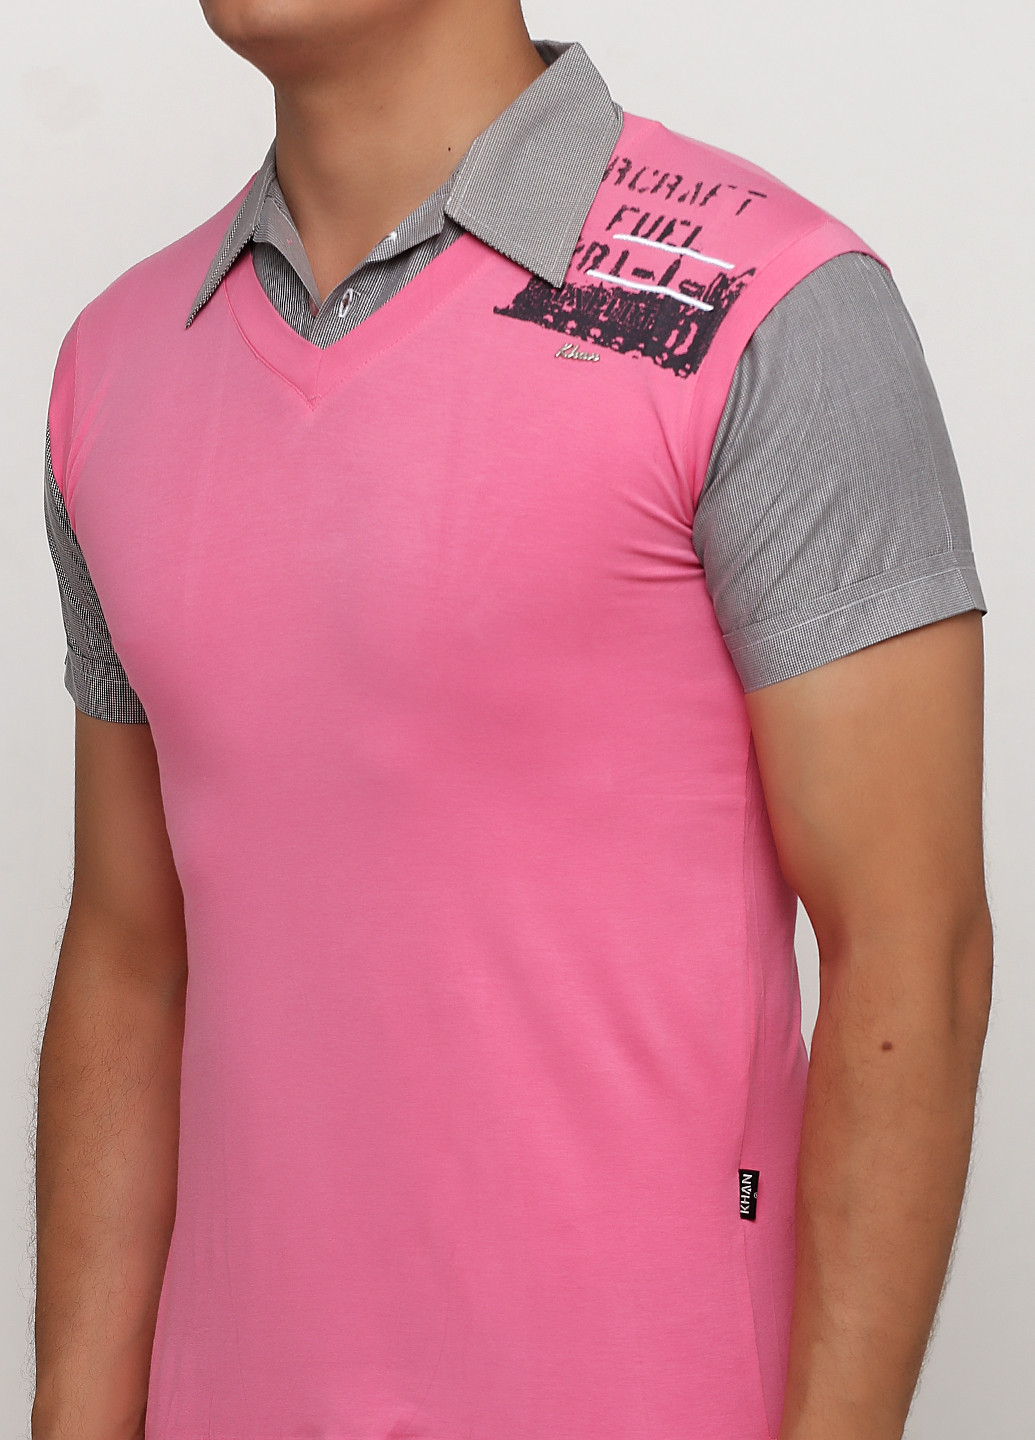 Розовая футболка-рубашка для мужчин KHAN с надписью